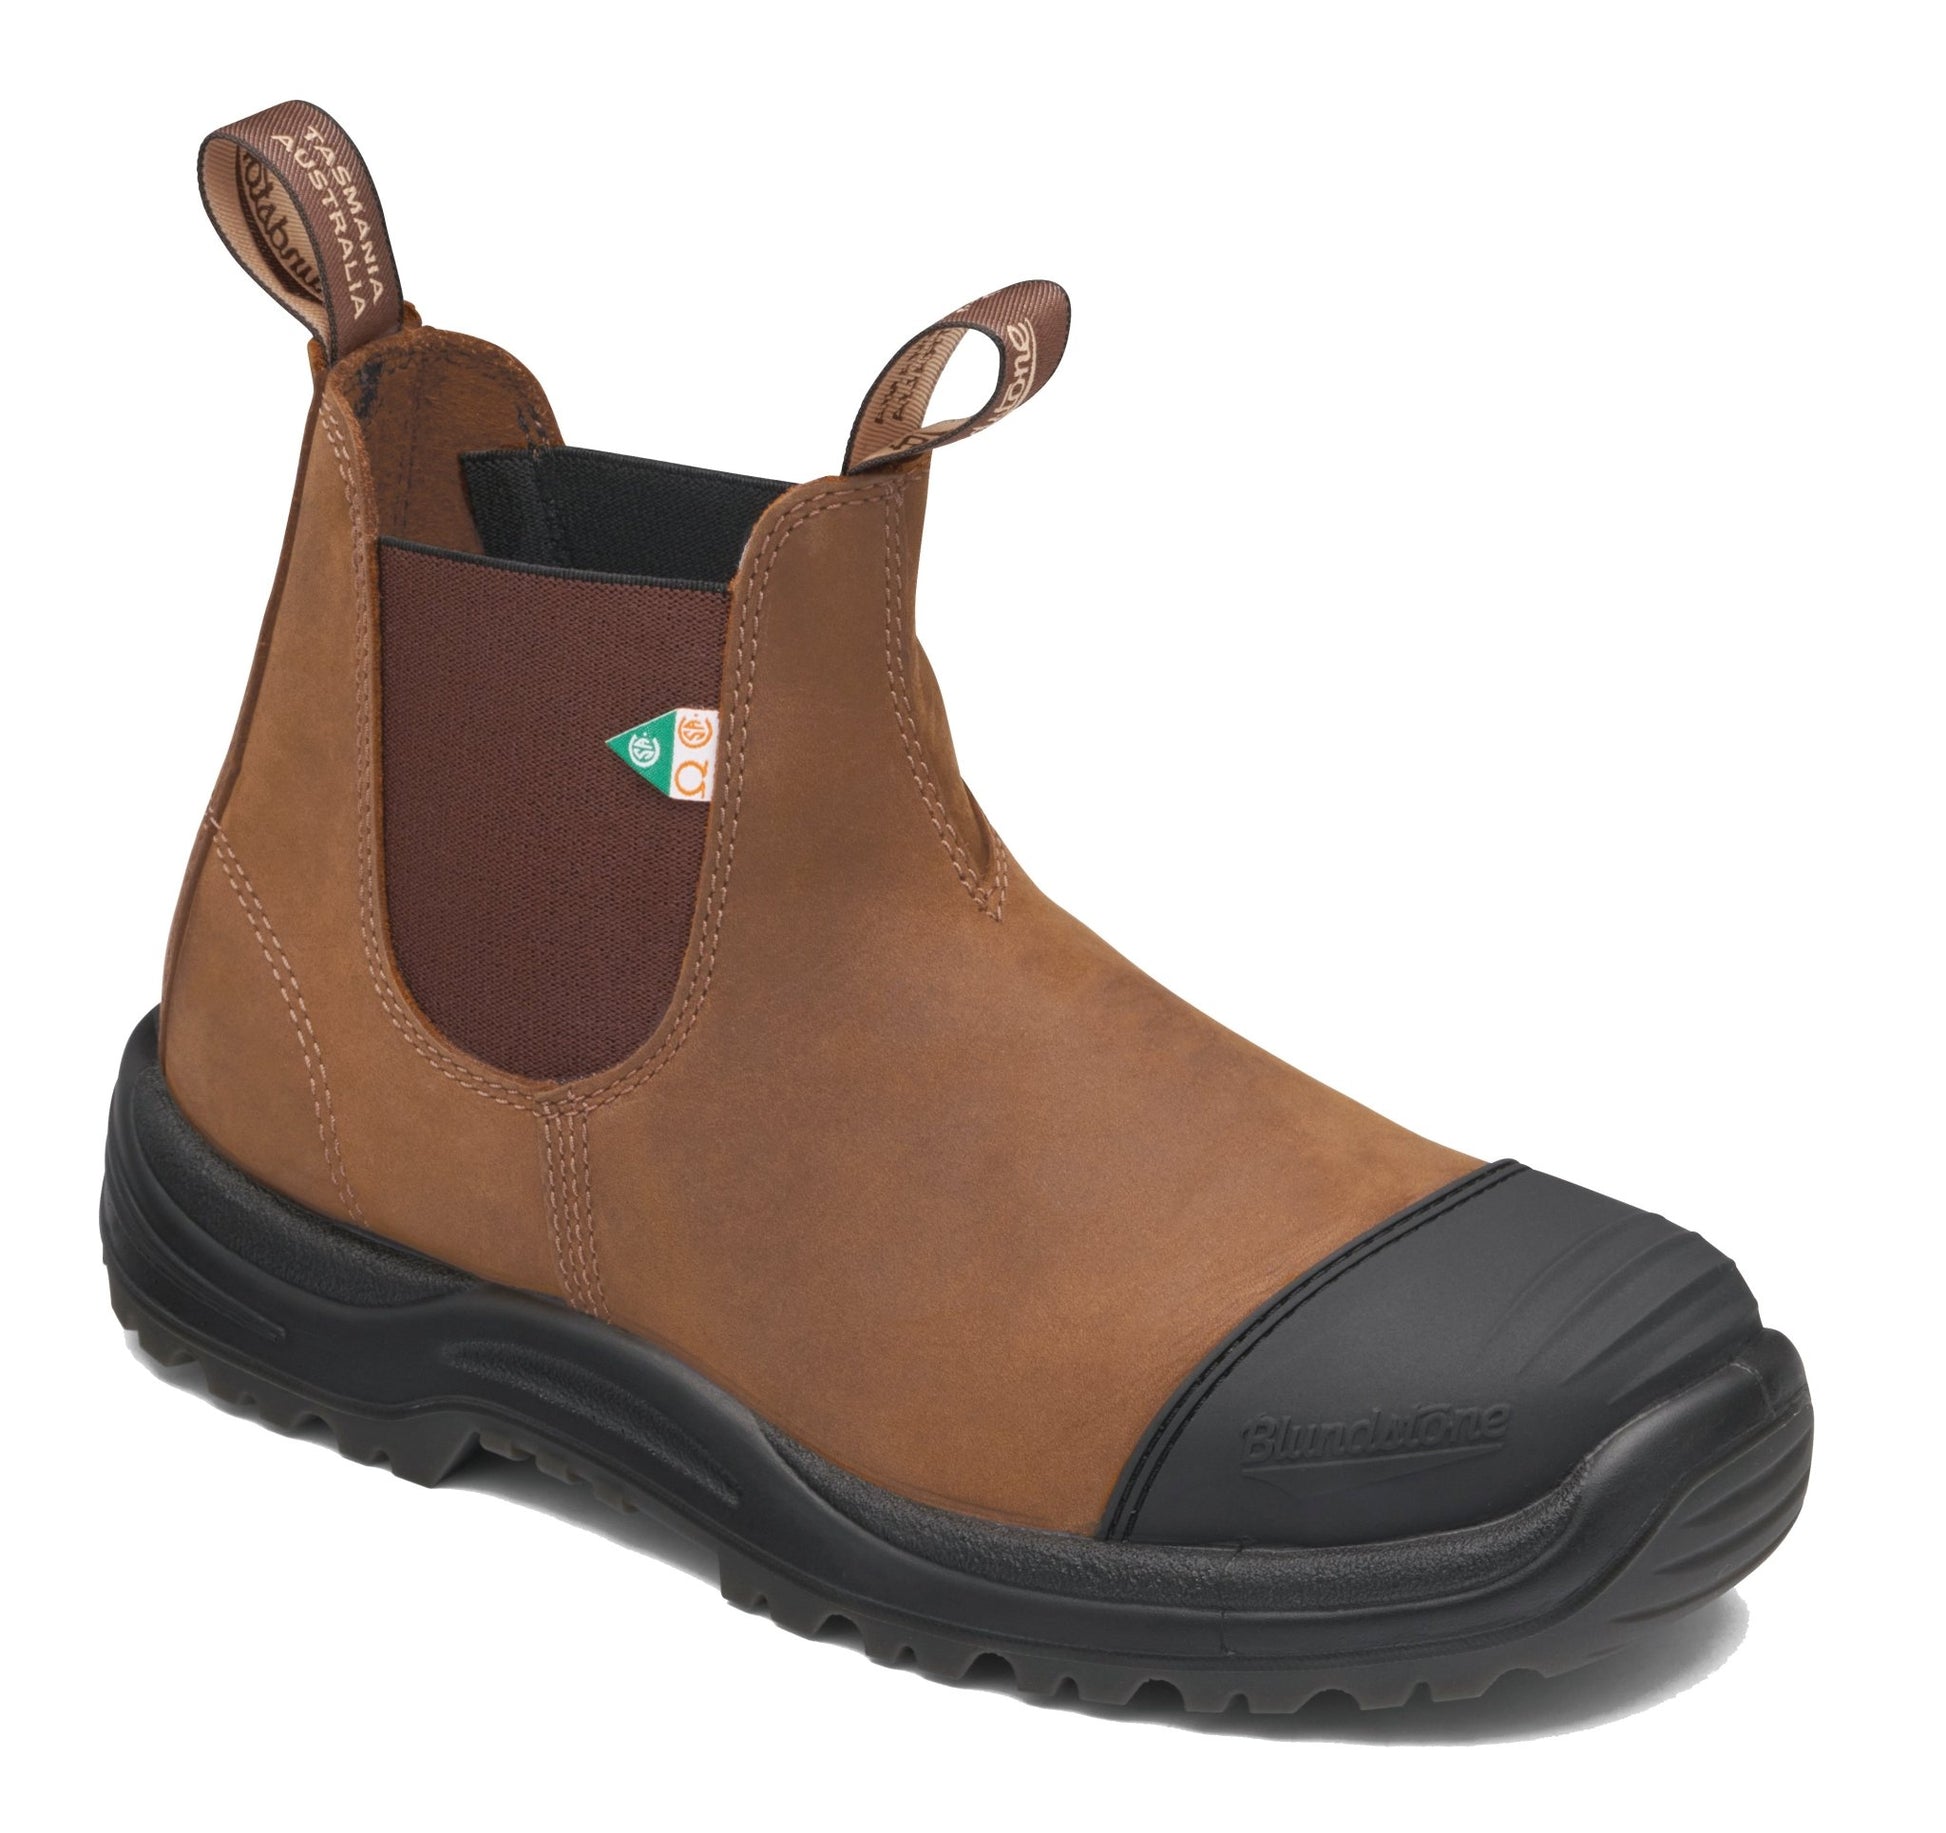 Blundstone 169 CSA Rubber Toe Saddle Brown - Grady’s Feet Essentials - Blundstone